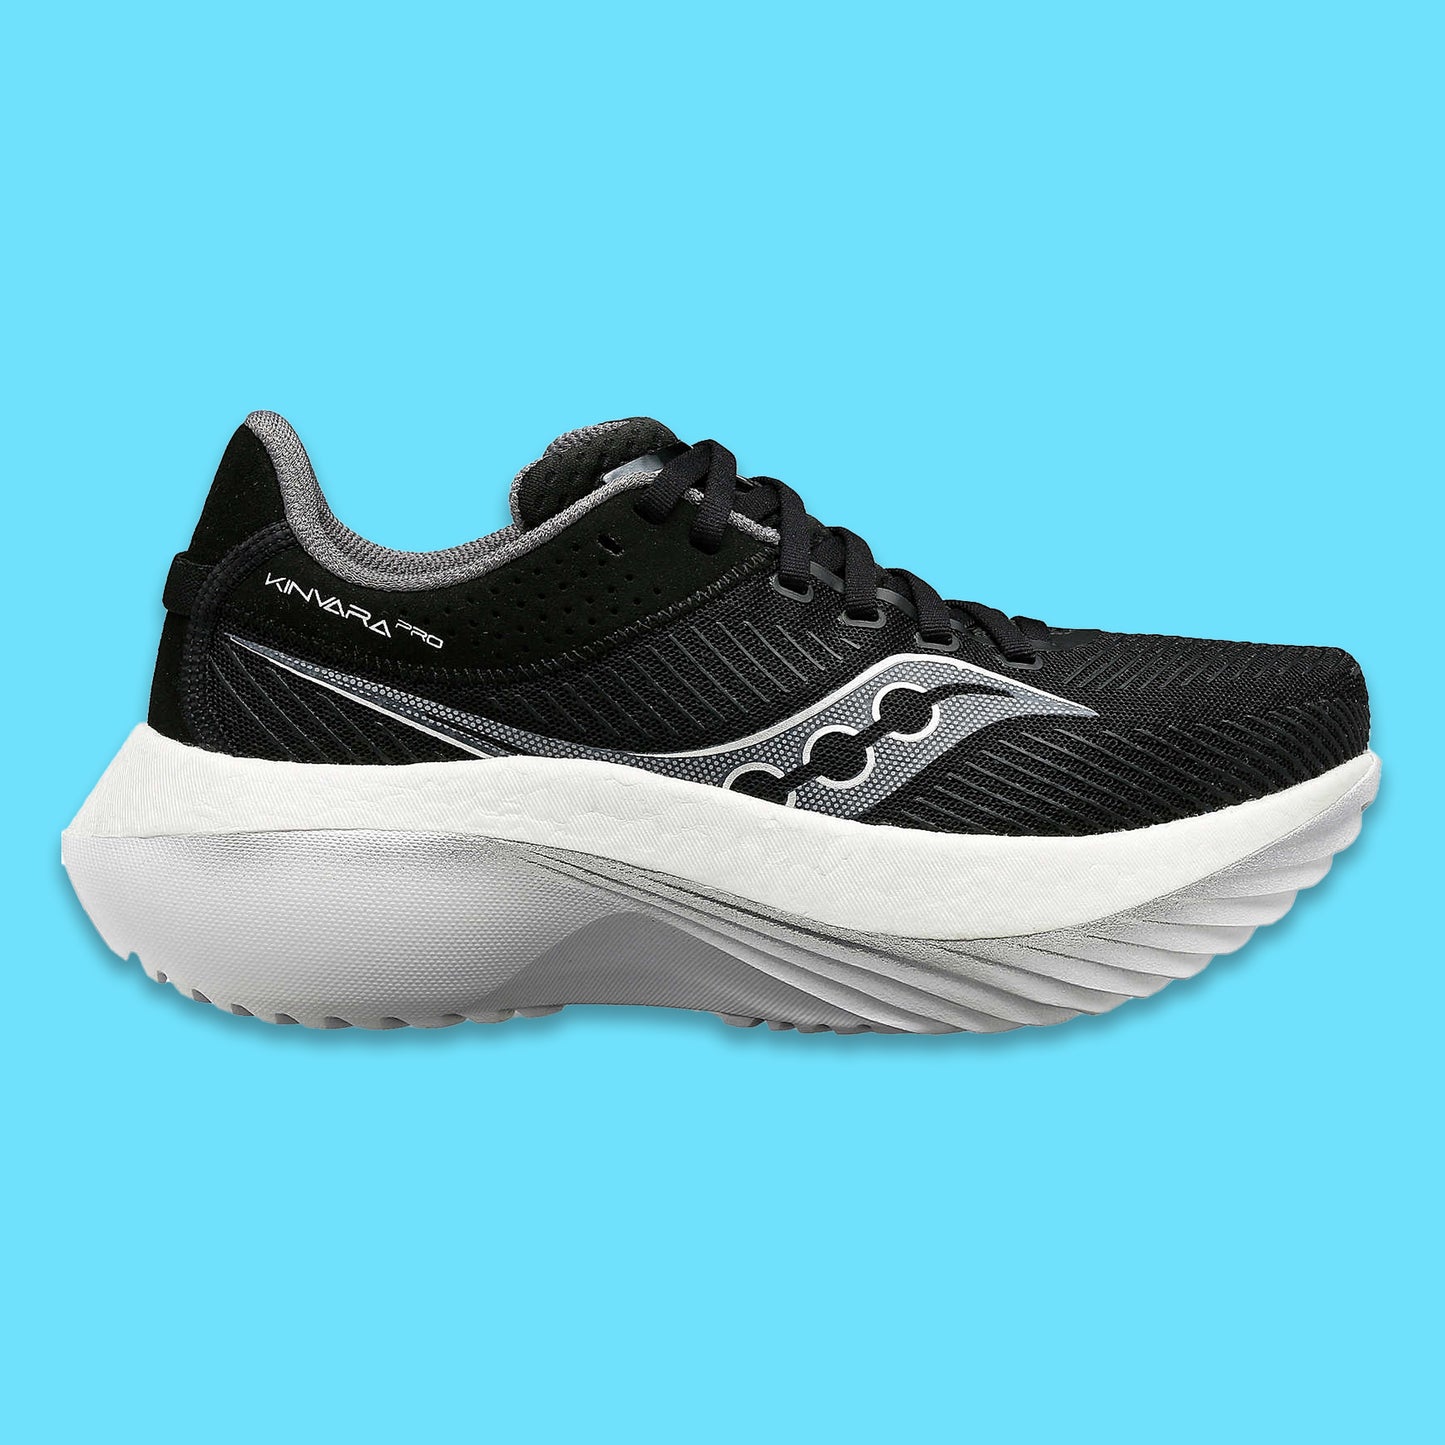 Men's Kinvara Pro - Fast Neutral Running Shoes